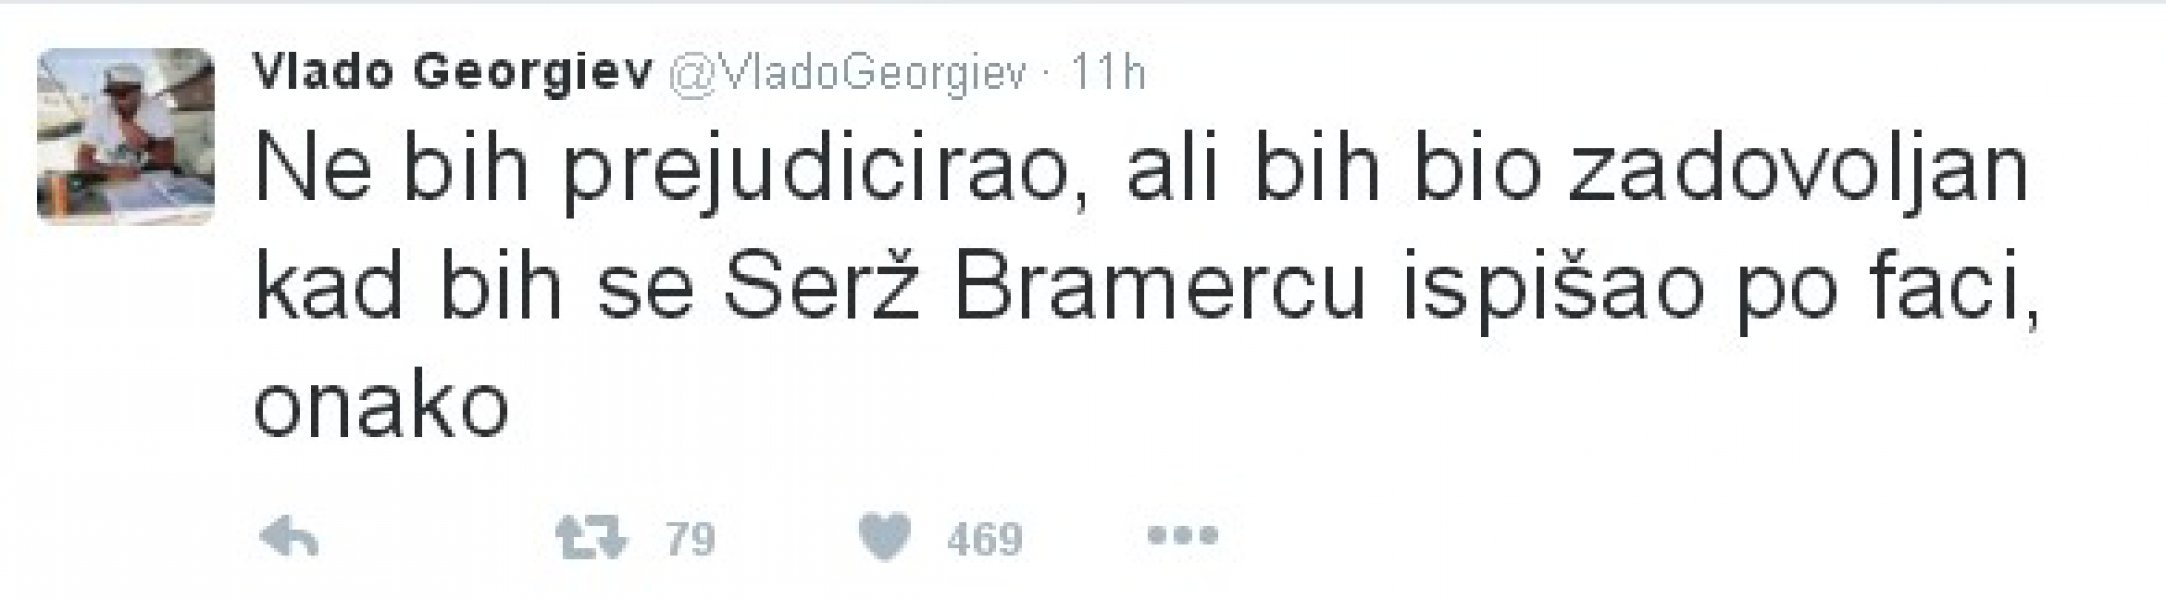 vlado-georgiev-twitter1